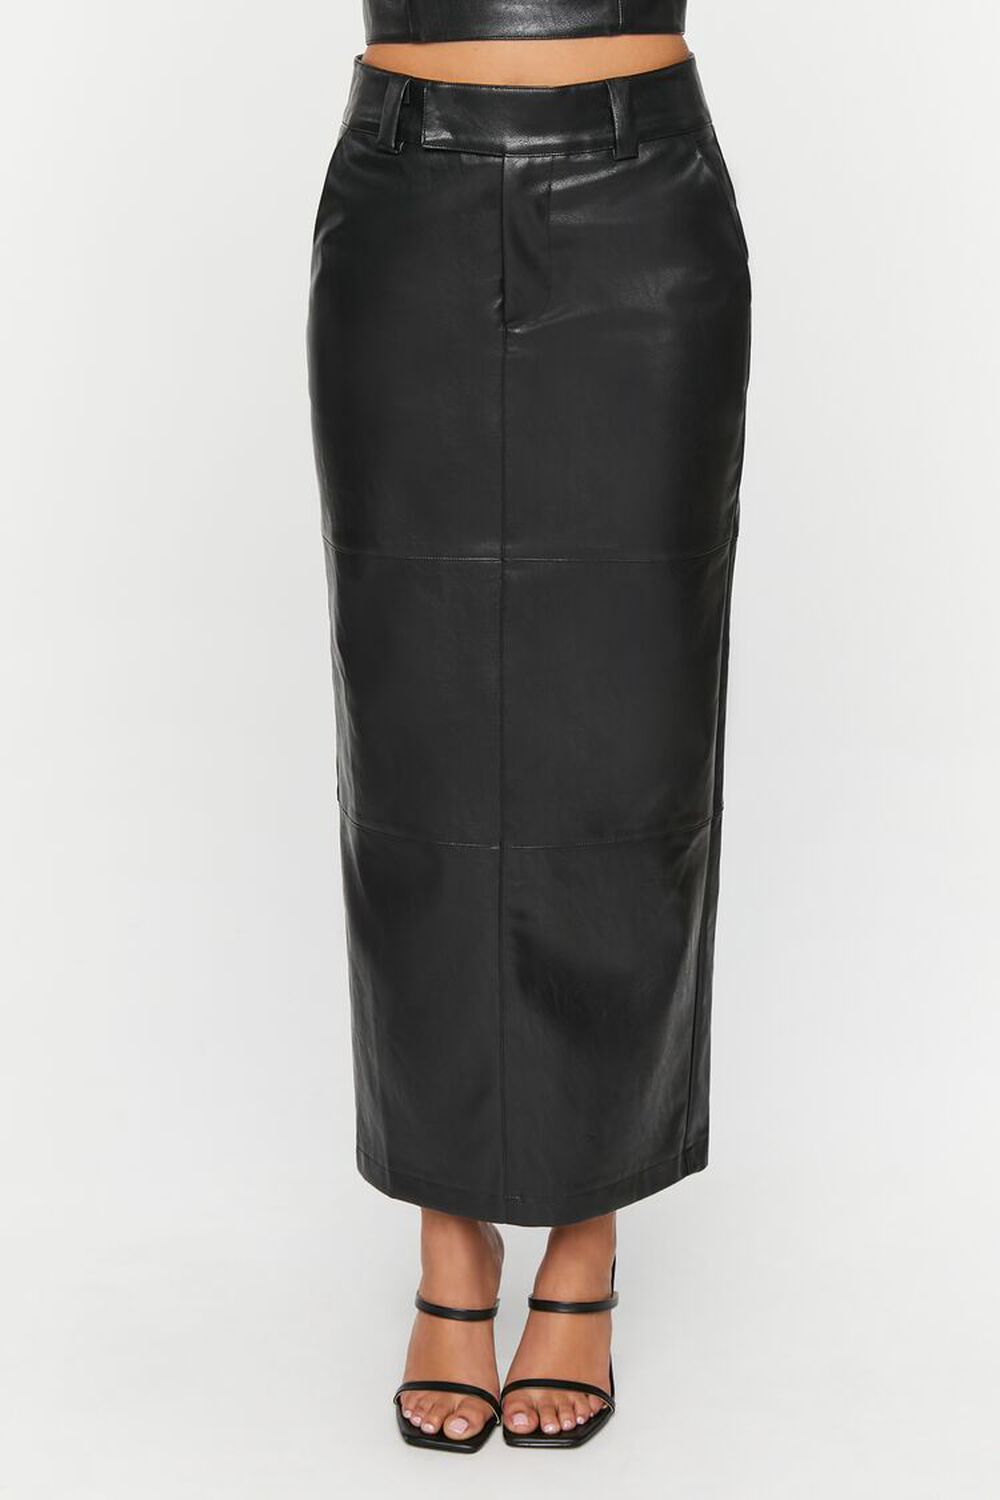 BLACK Faux Leather Slit Midi Skirt, image 2